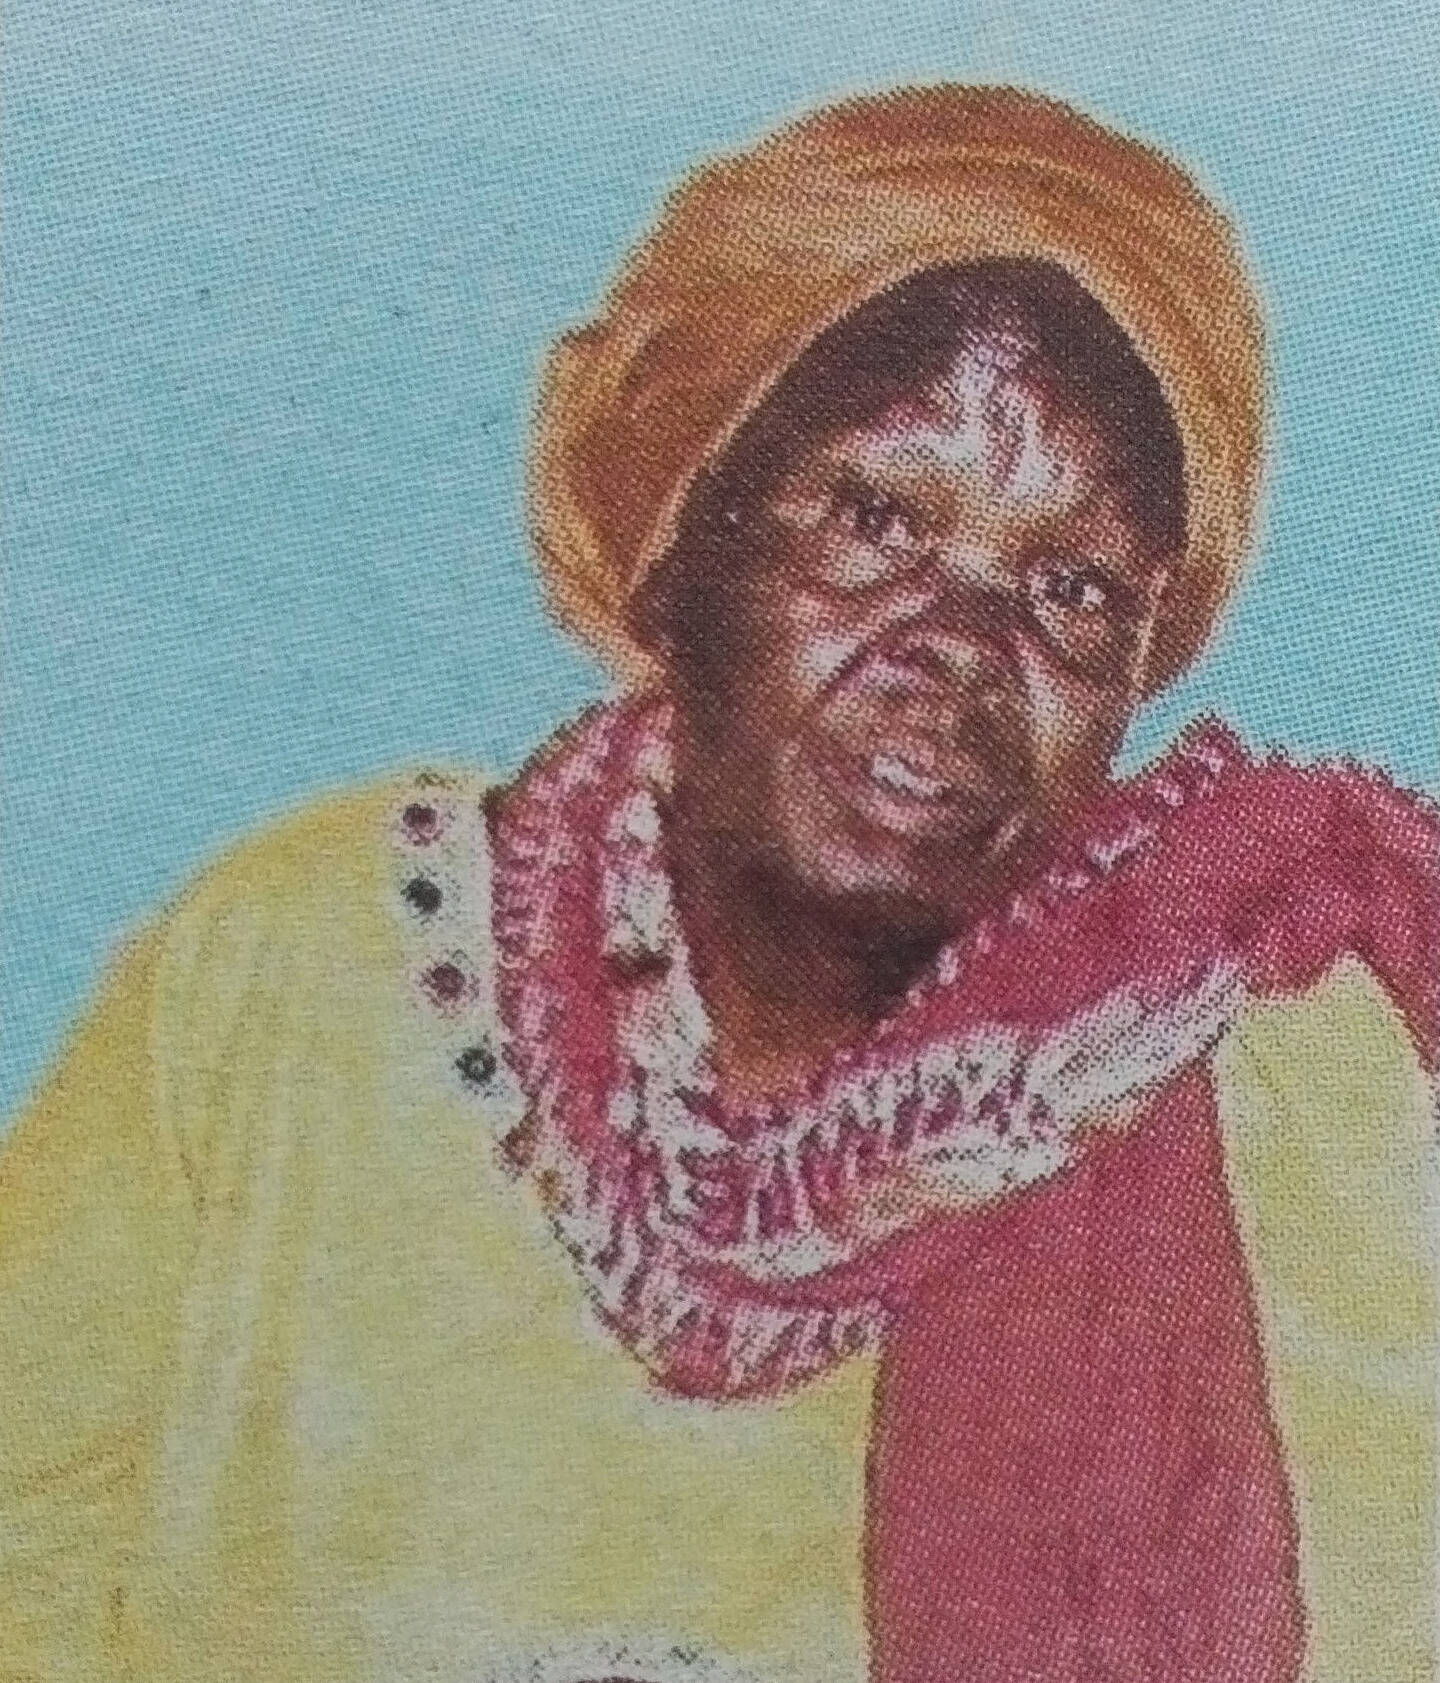 Obituary Image of Mama Teresa Nyarinda lchwara 1936-17th April,2017